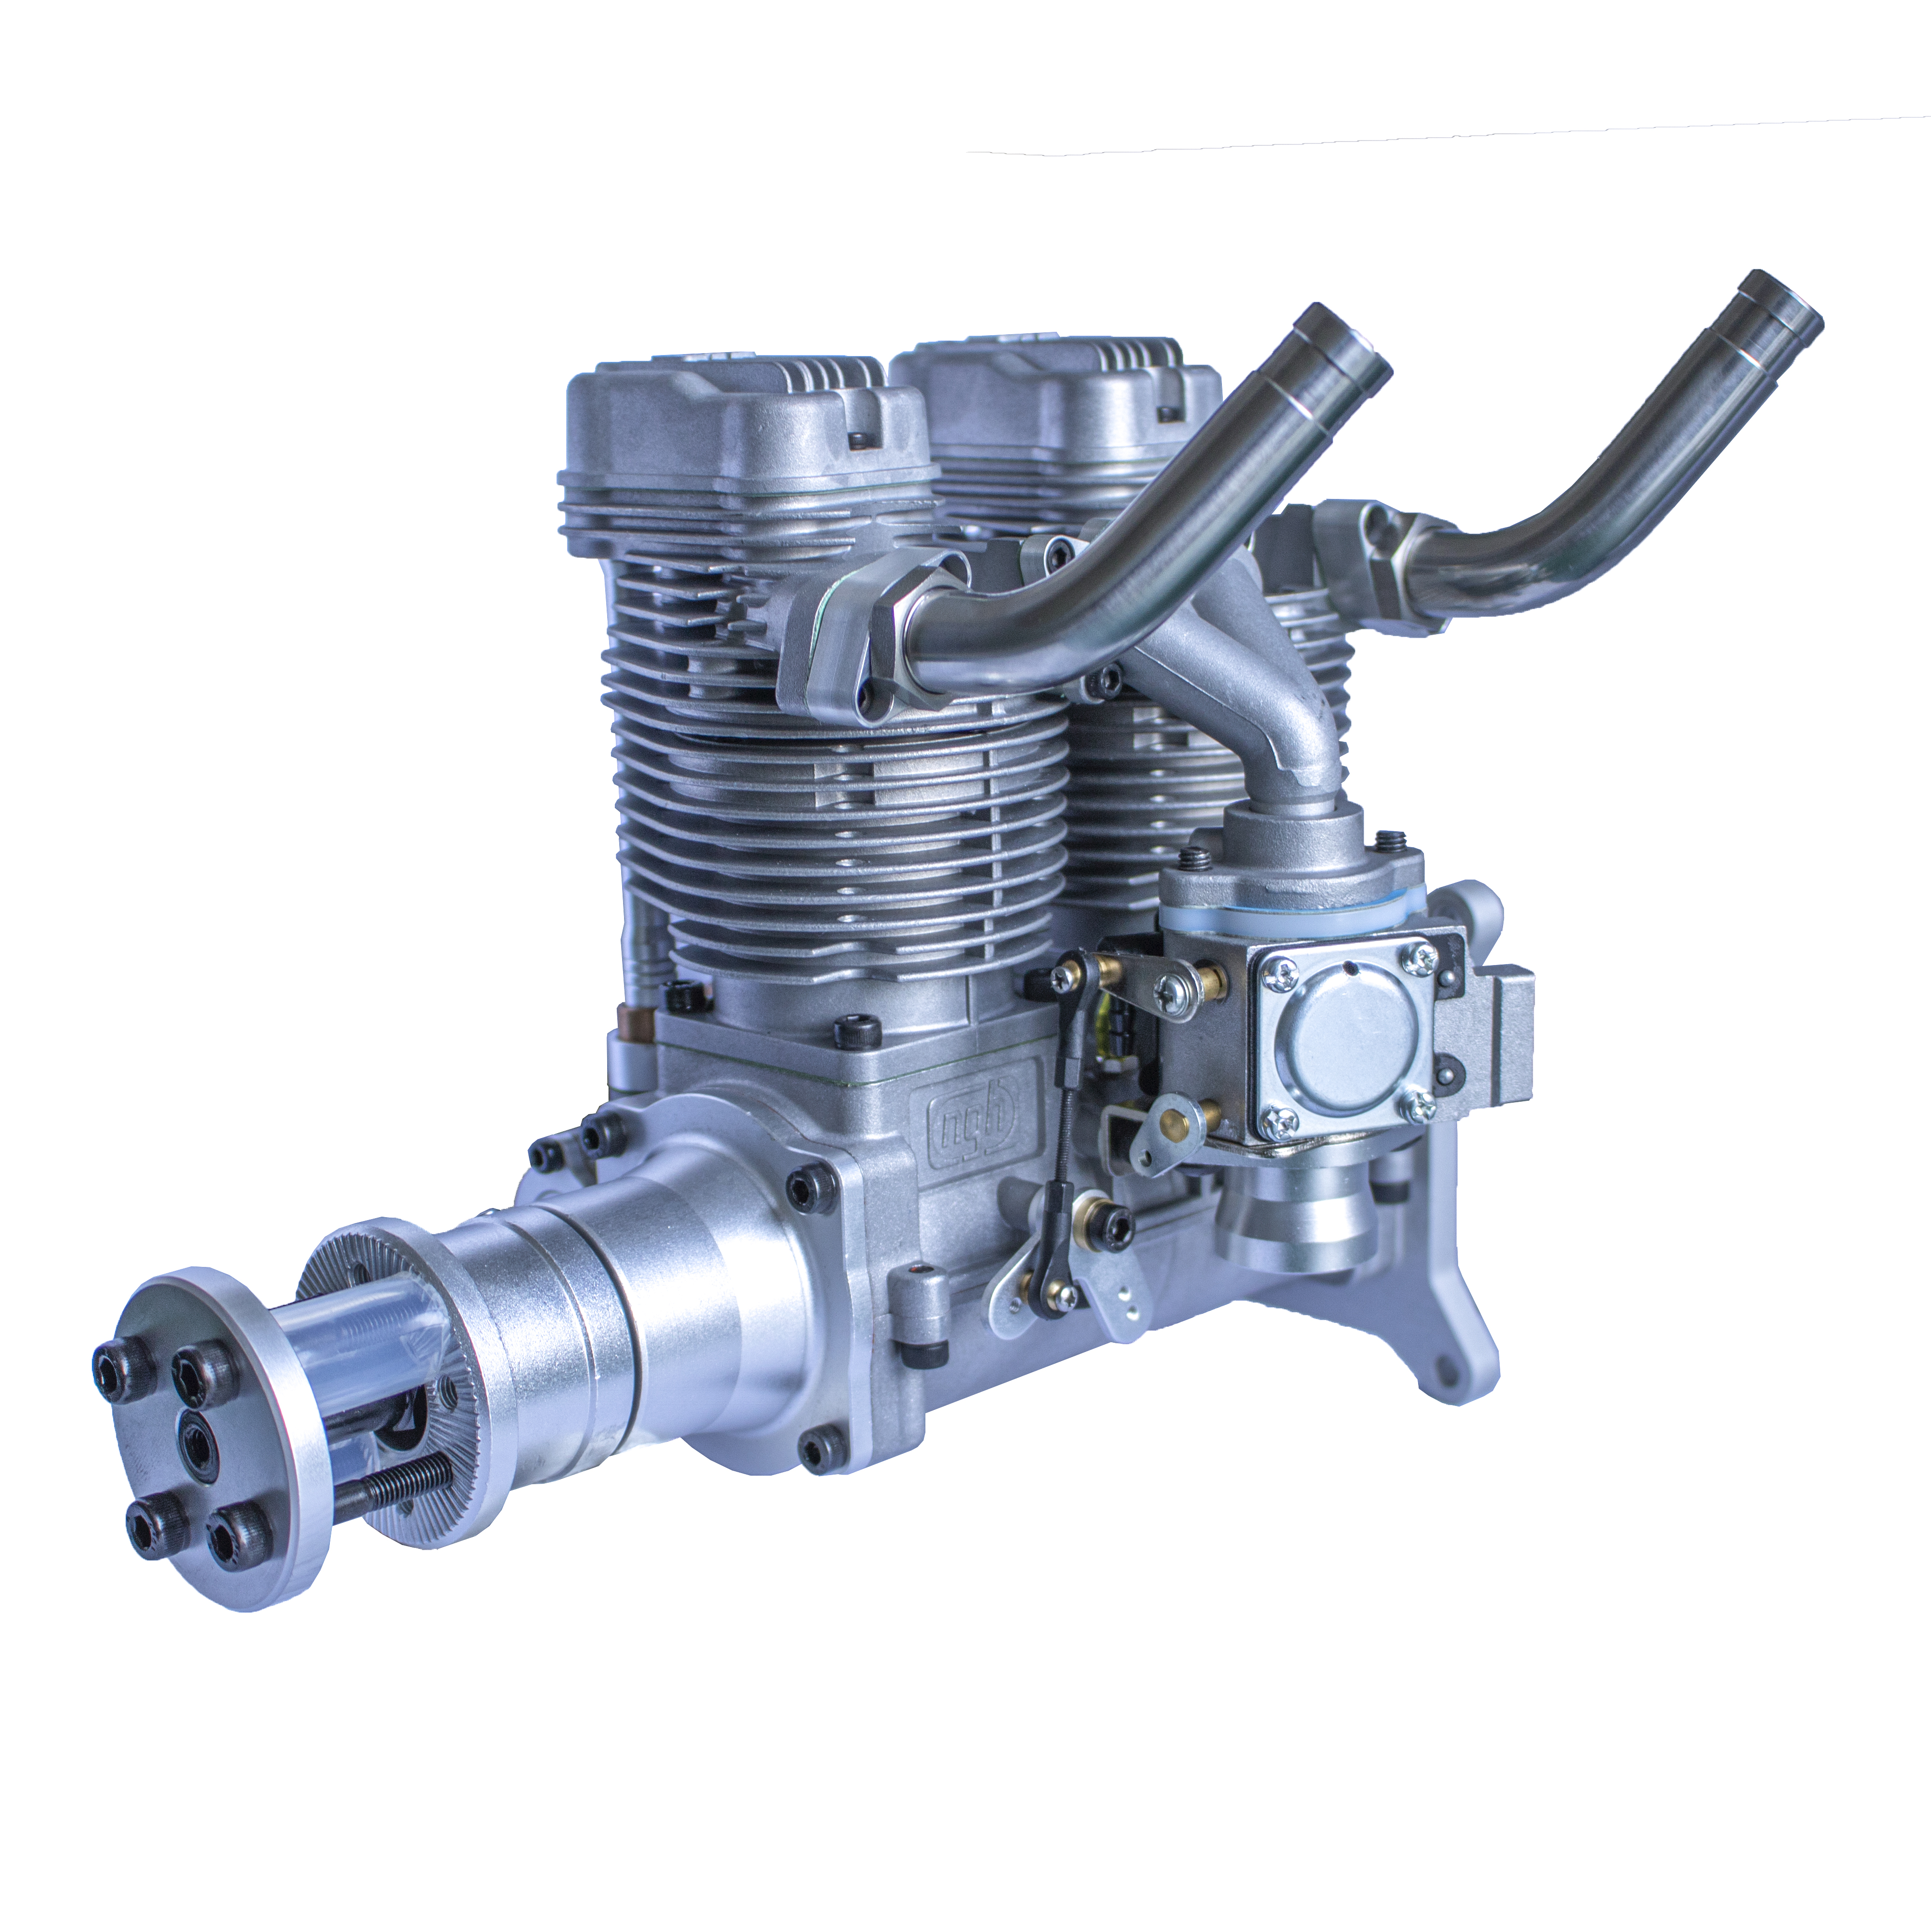 GF60i2  Linear double cylinder 4-stroke gasoline engine 